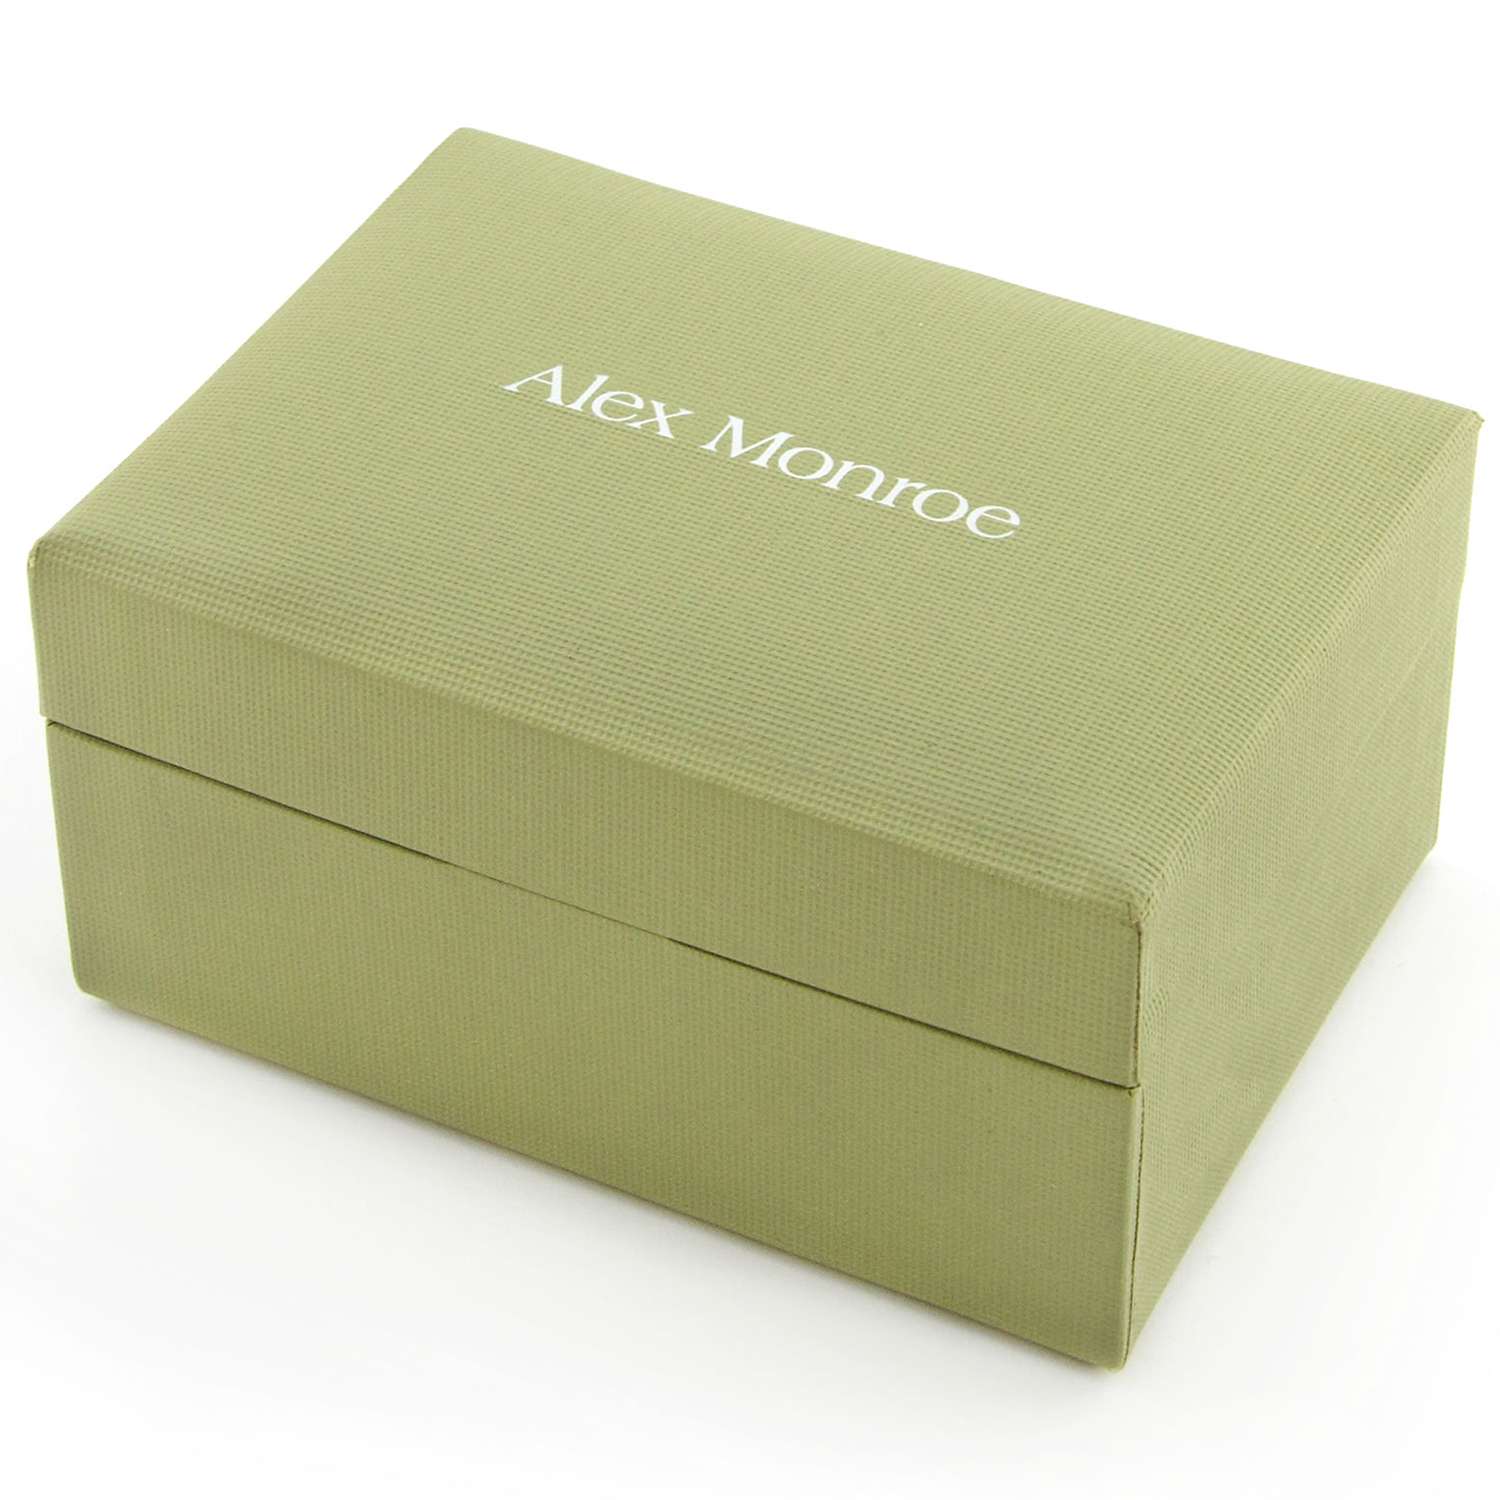 Buy Alex Monroe Hummingbird Pendant Necklace, Gold Online at johnlewis.com